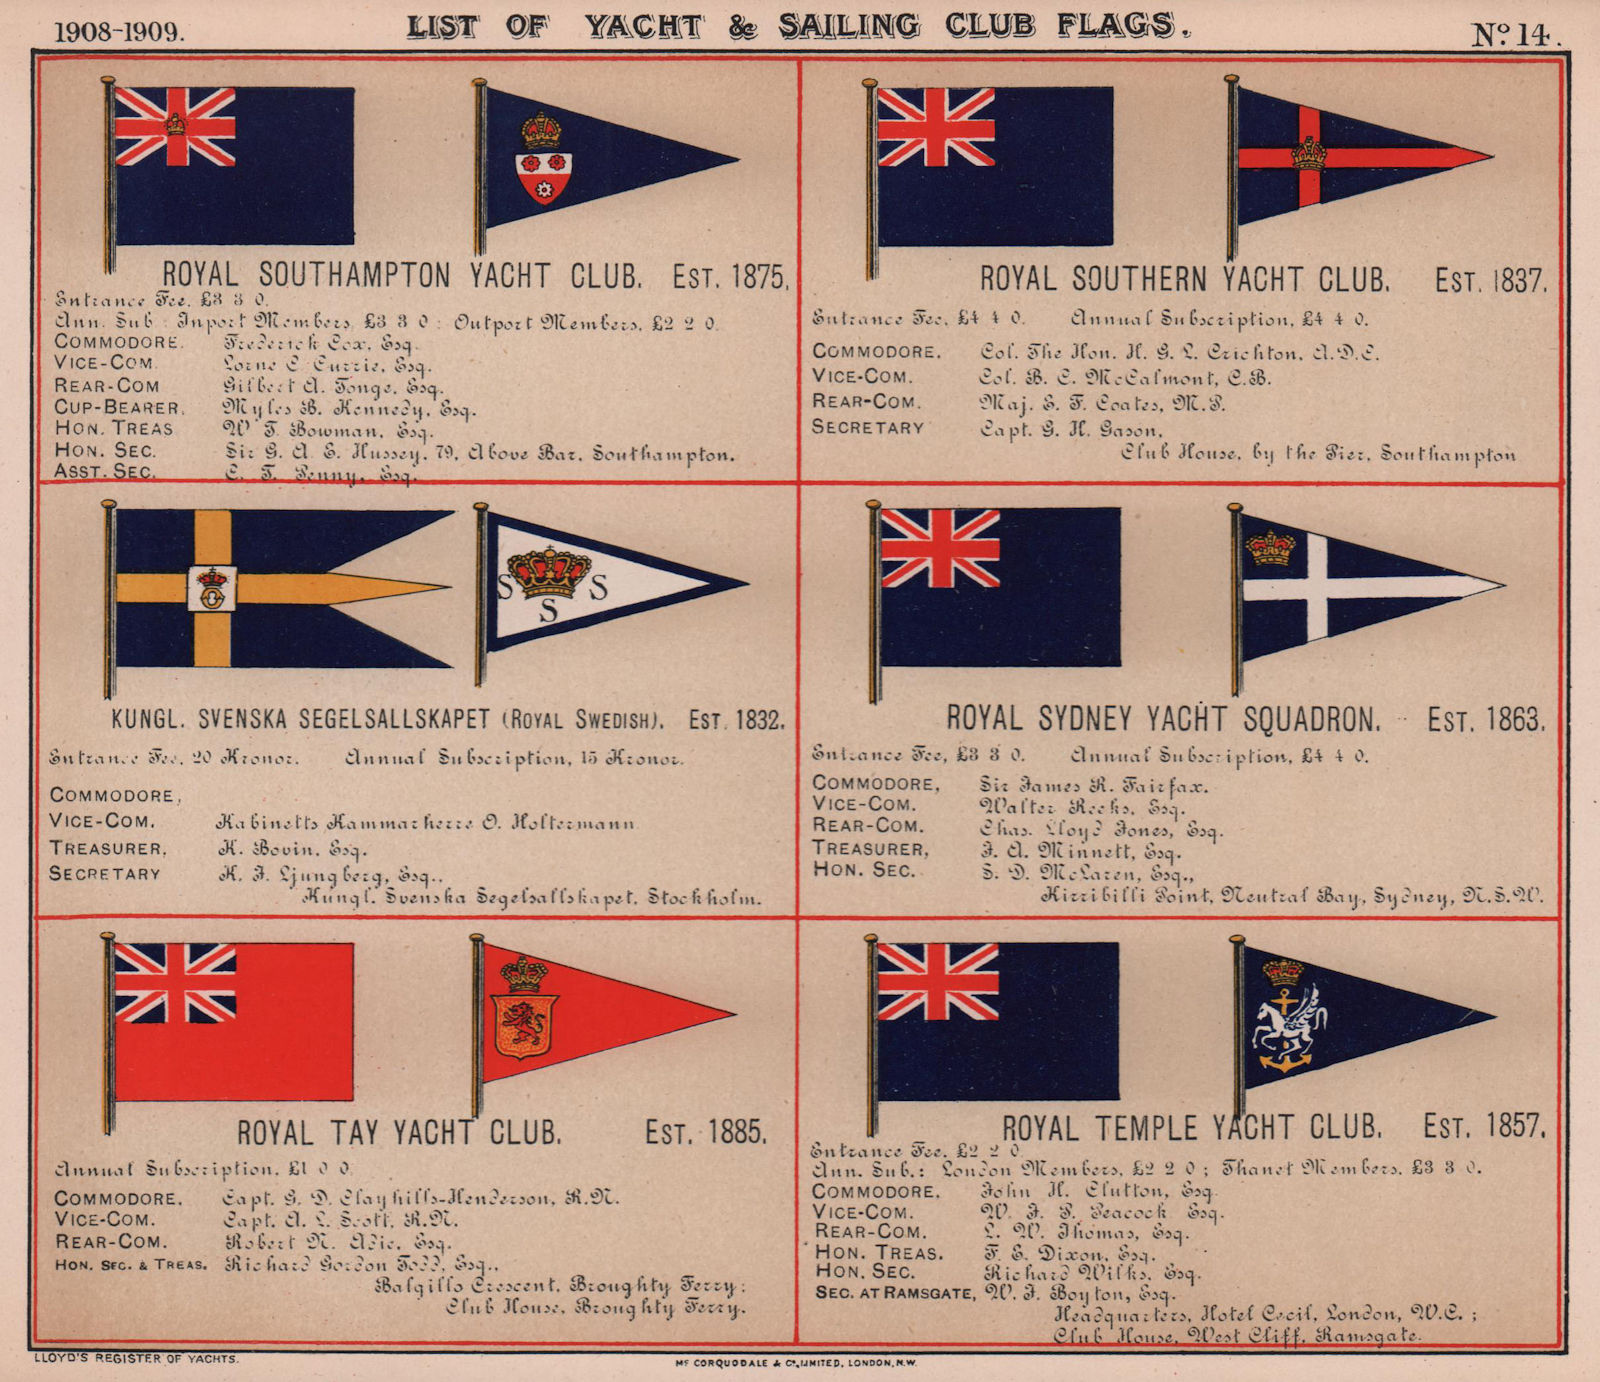 Associate Product ROYAL YACHT & SAILING CLUB FLAGS S-T Southampton Swedish Sydney Tay Temple 1908